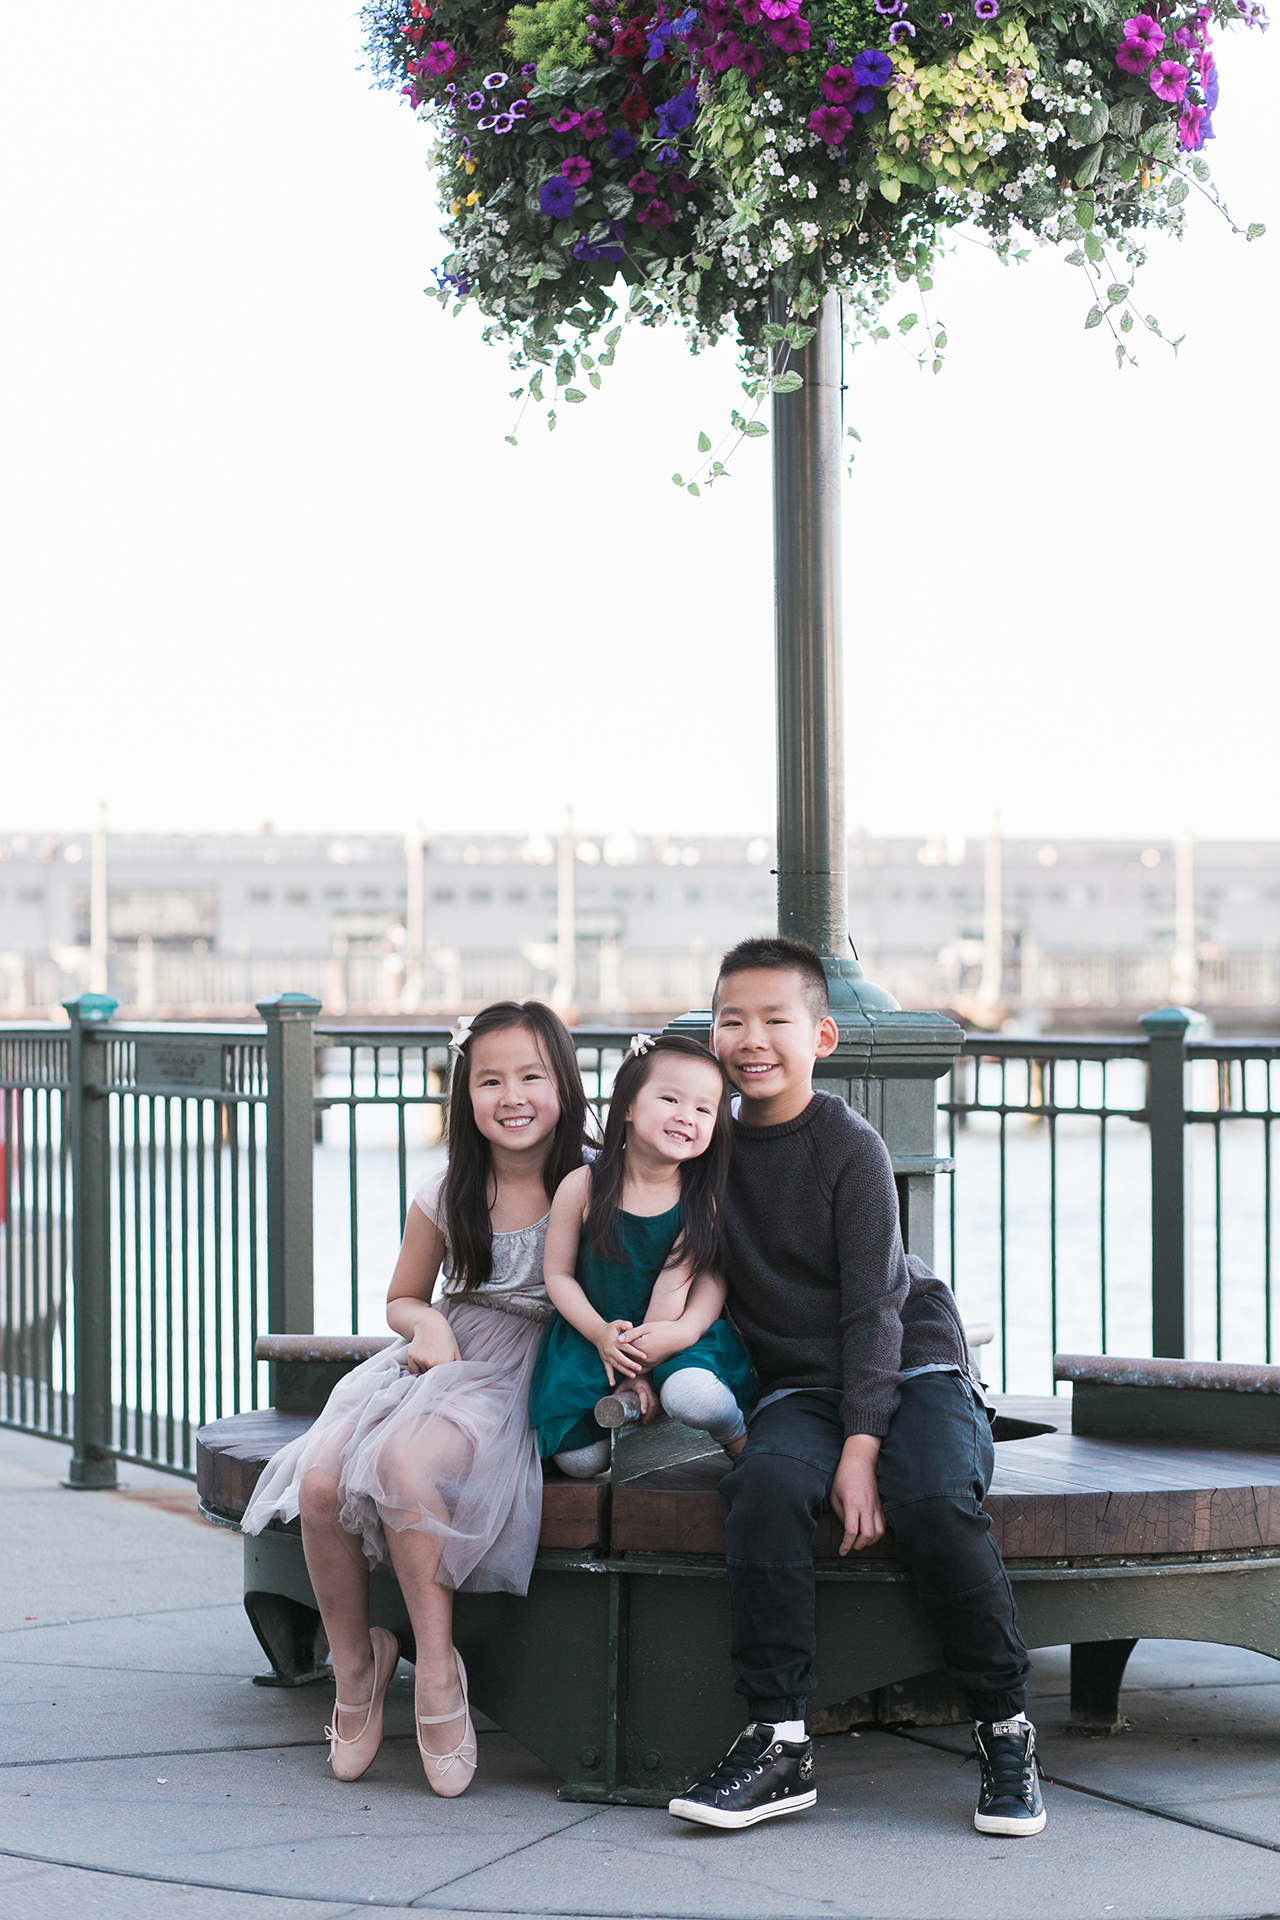 San_Francisco_Children_and_Family_Portrait_007.jpg